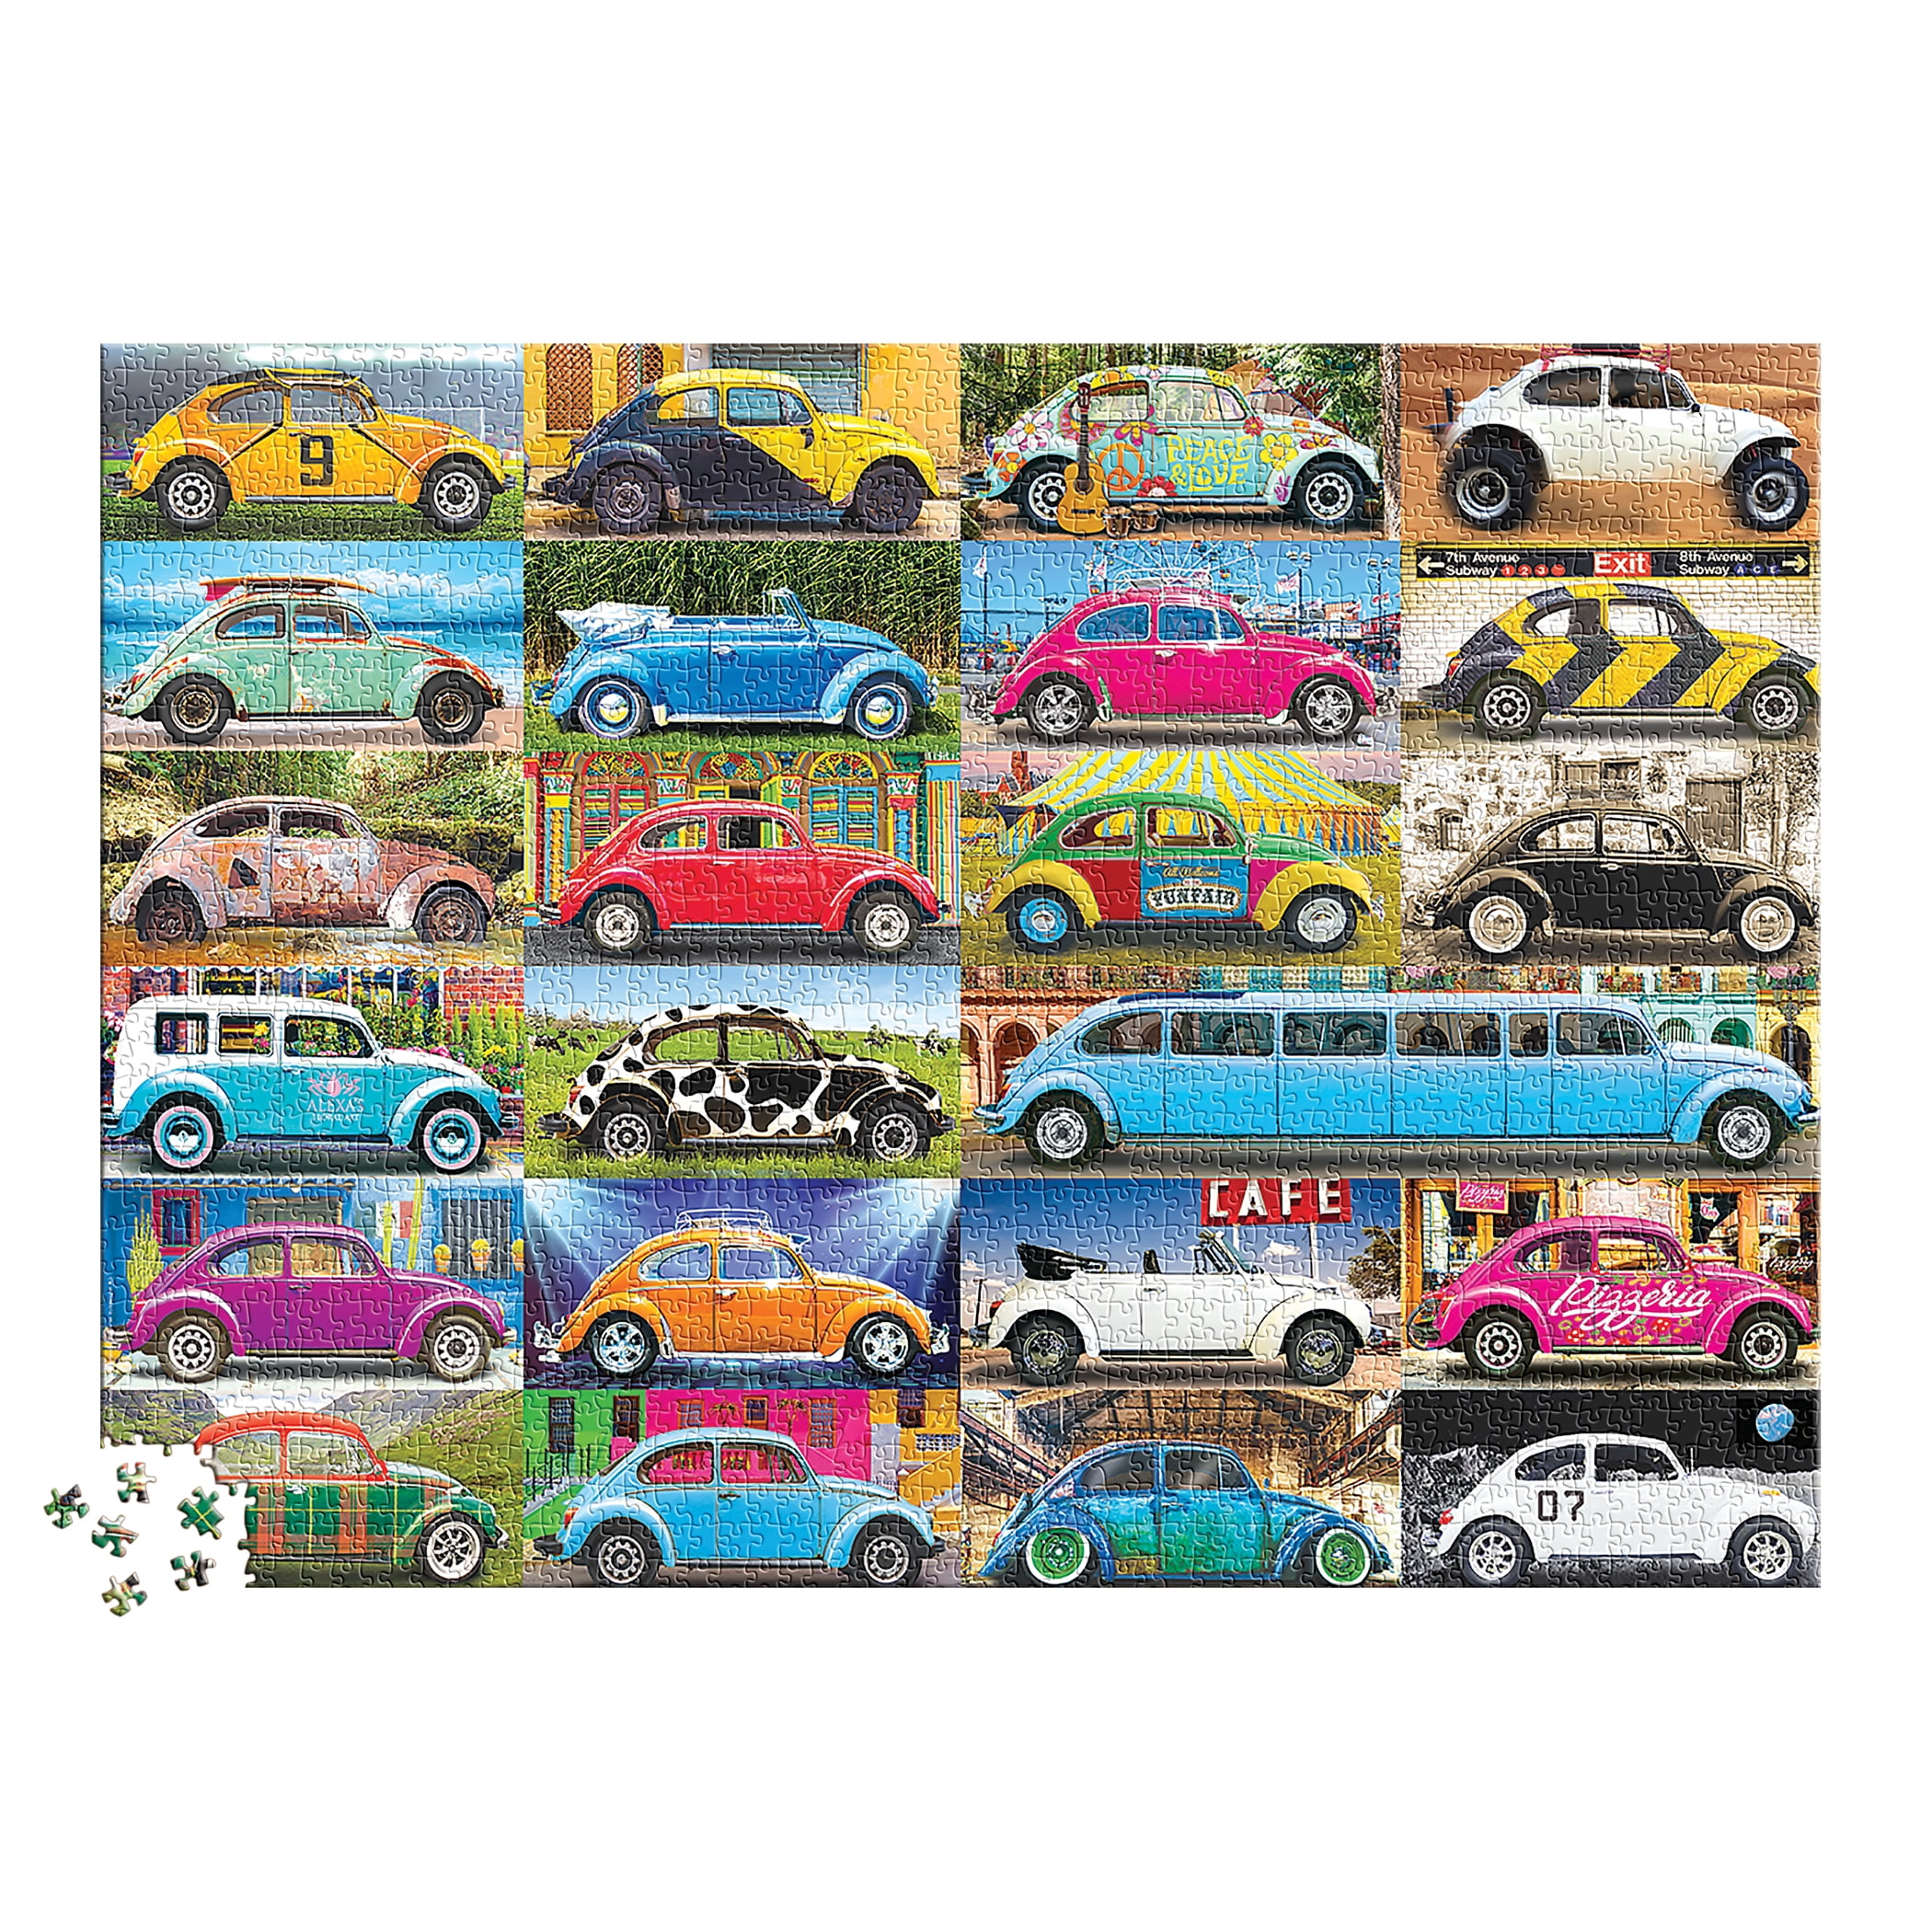 EuroGraphics 5422 Volkswagen Beetle Gone Places Puzzle 1000 Piece 6000-5422